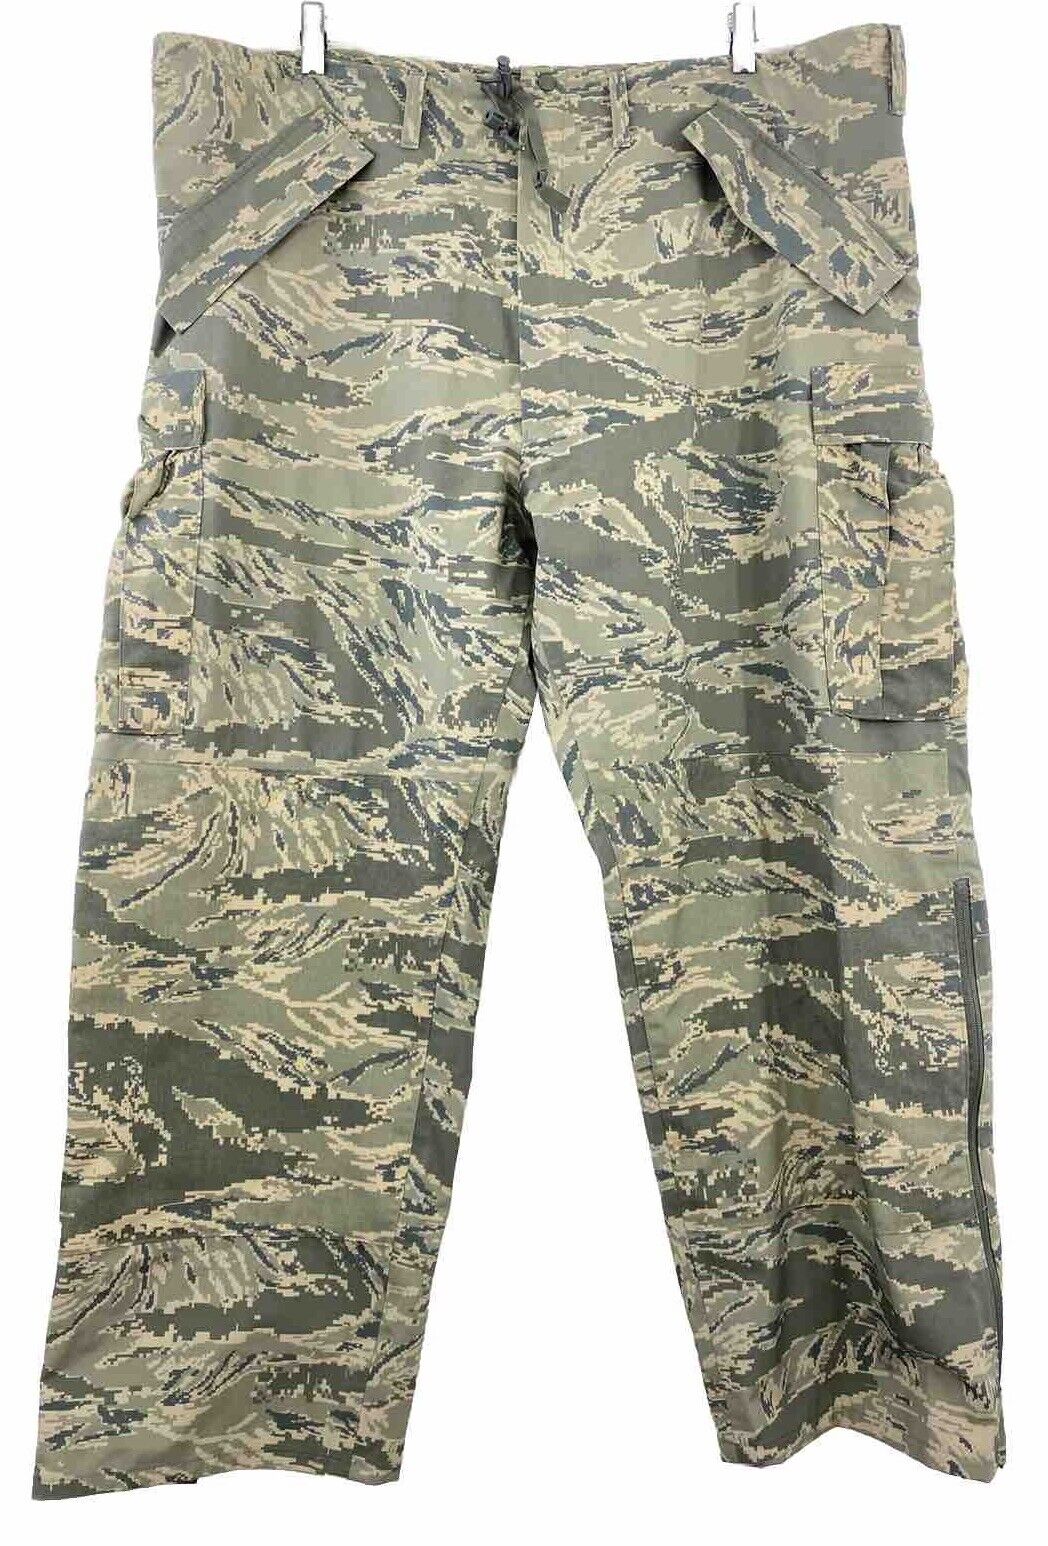 Military Gore-Tex Trouser Over Pant XLR All Purpose Environmental Camo Cargo 